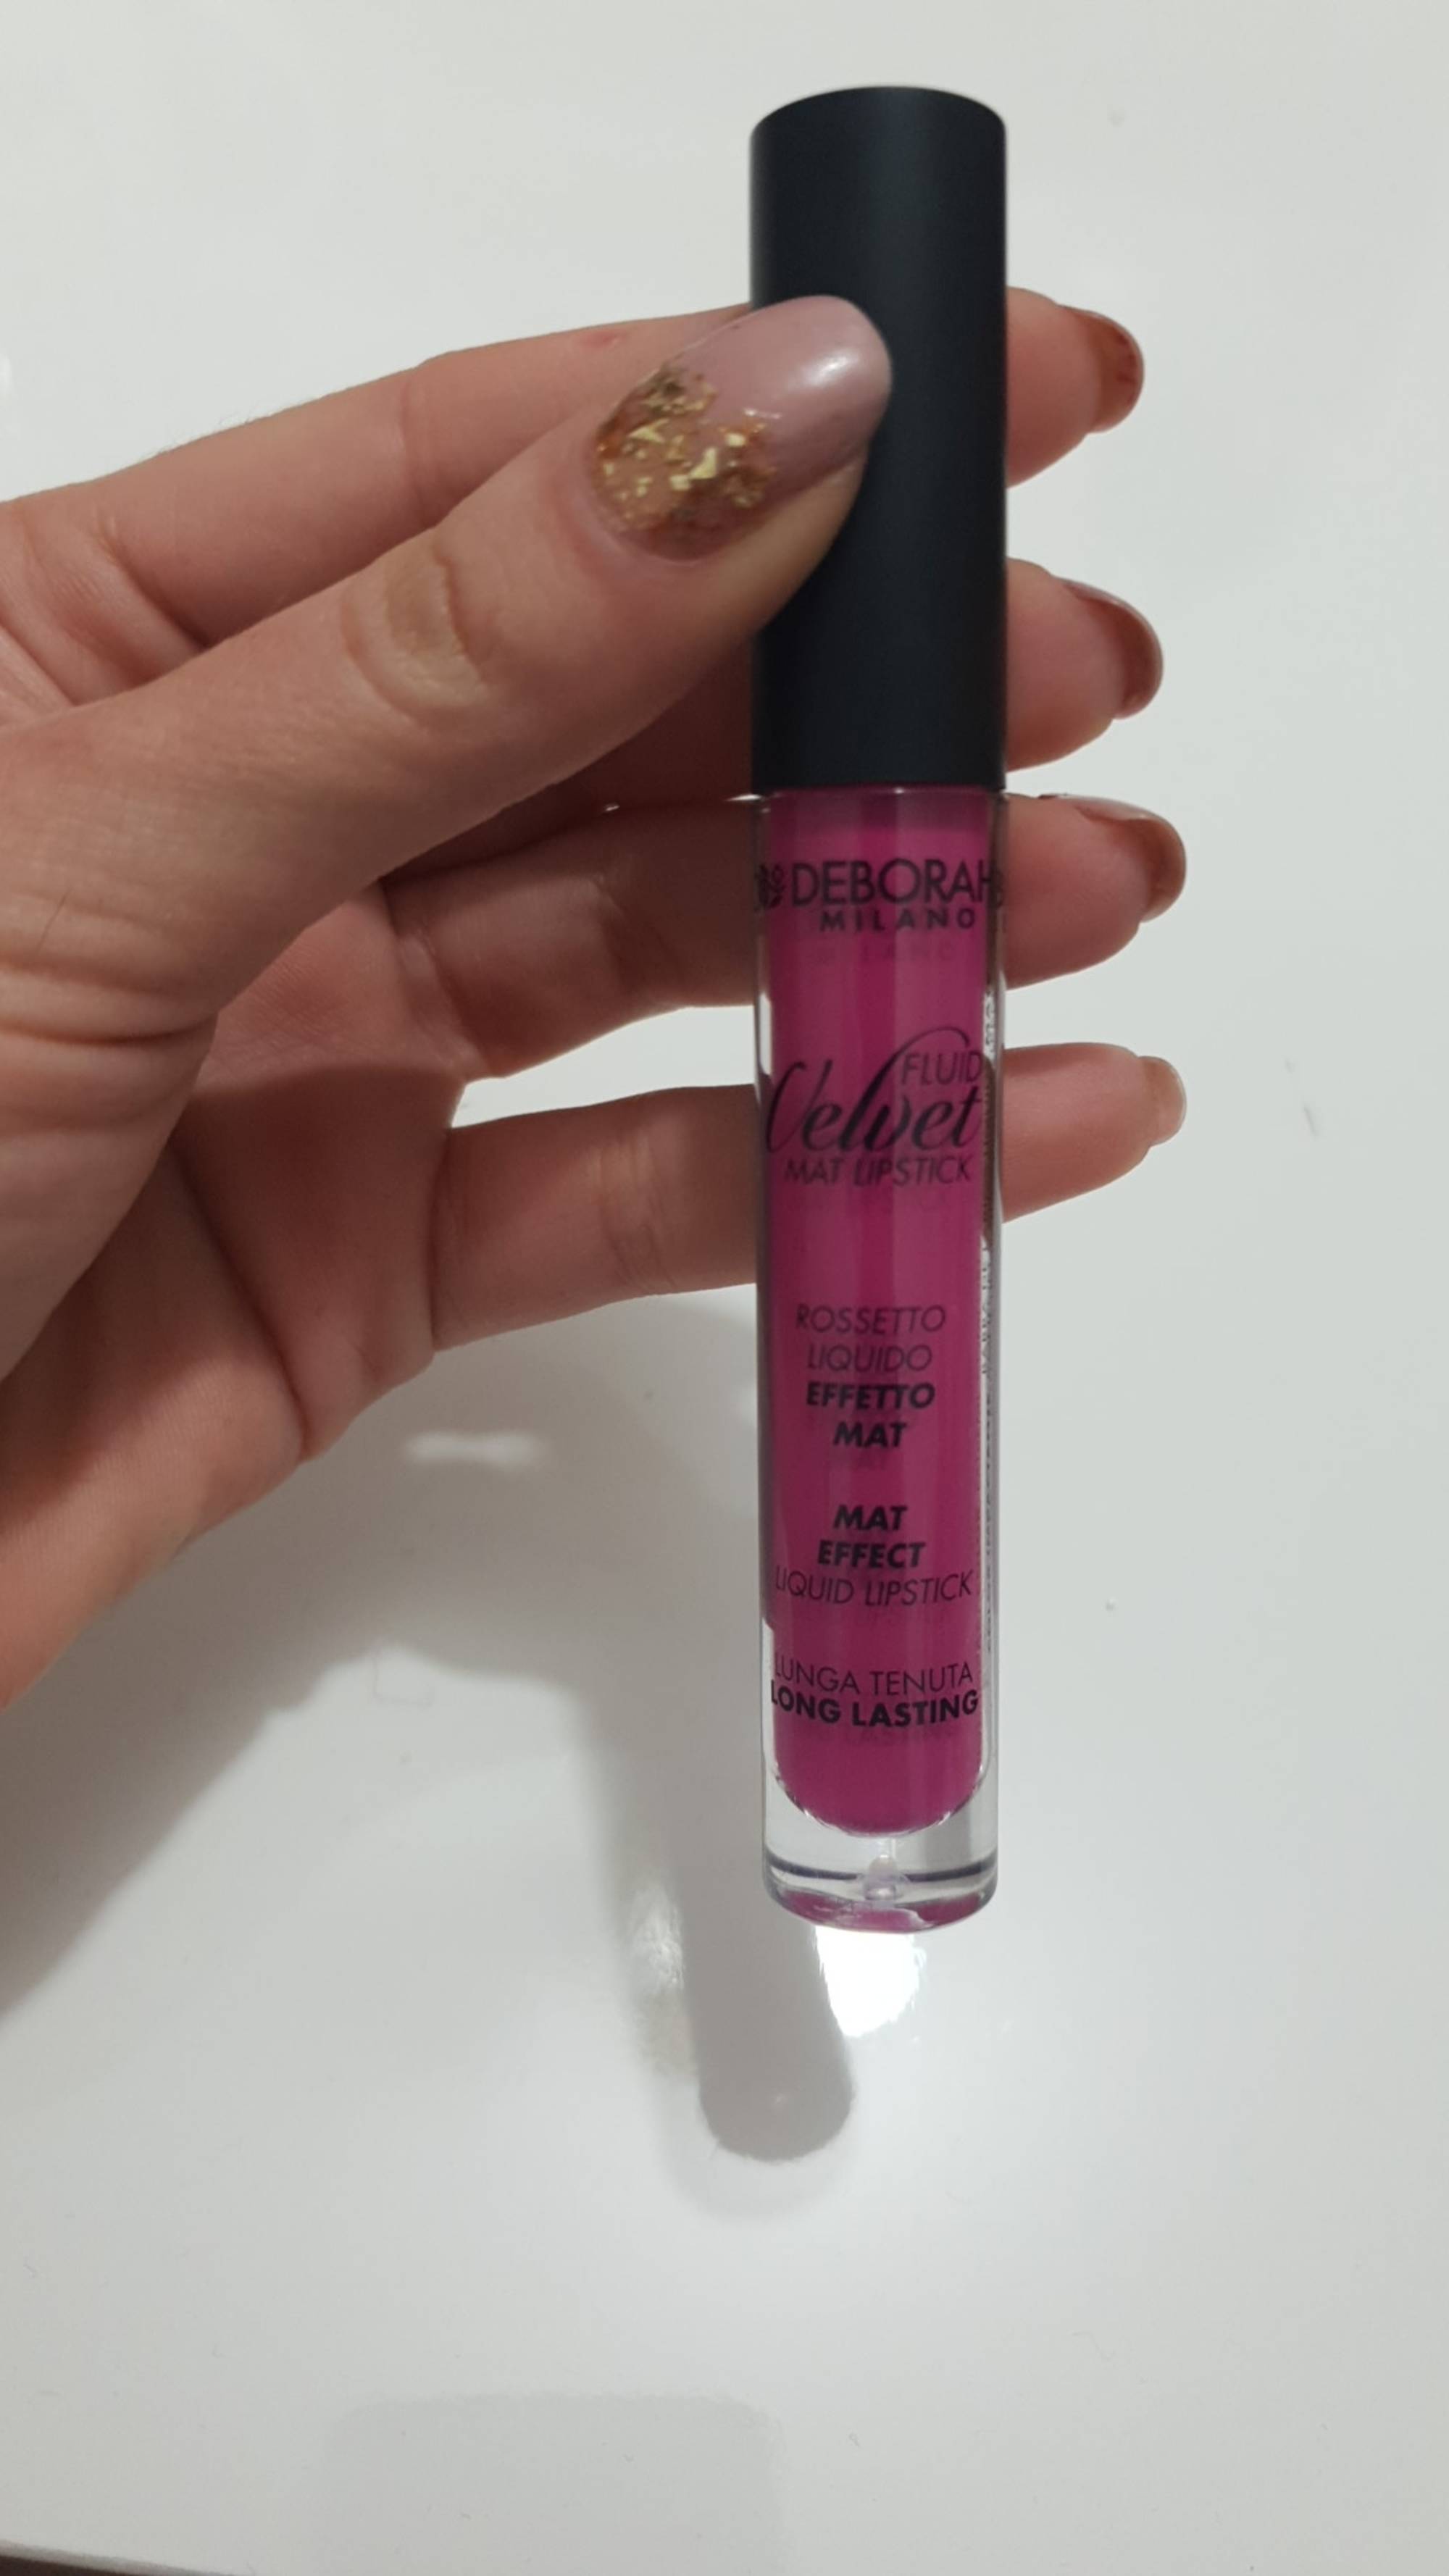 DEBORAH MILANO - Fluid velvet - Mat effect liquid lipstick